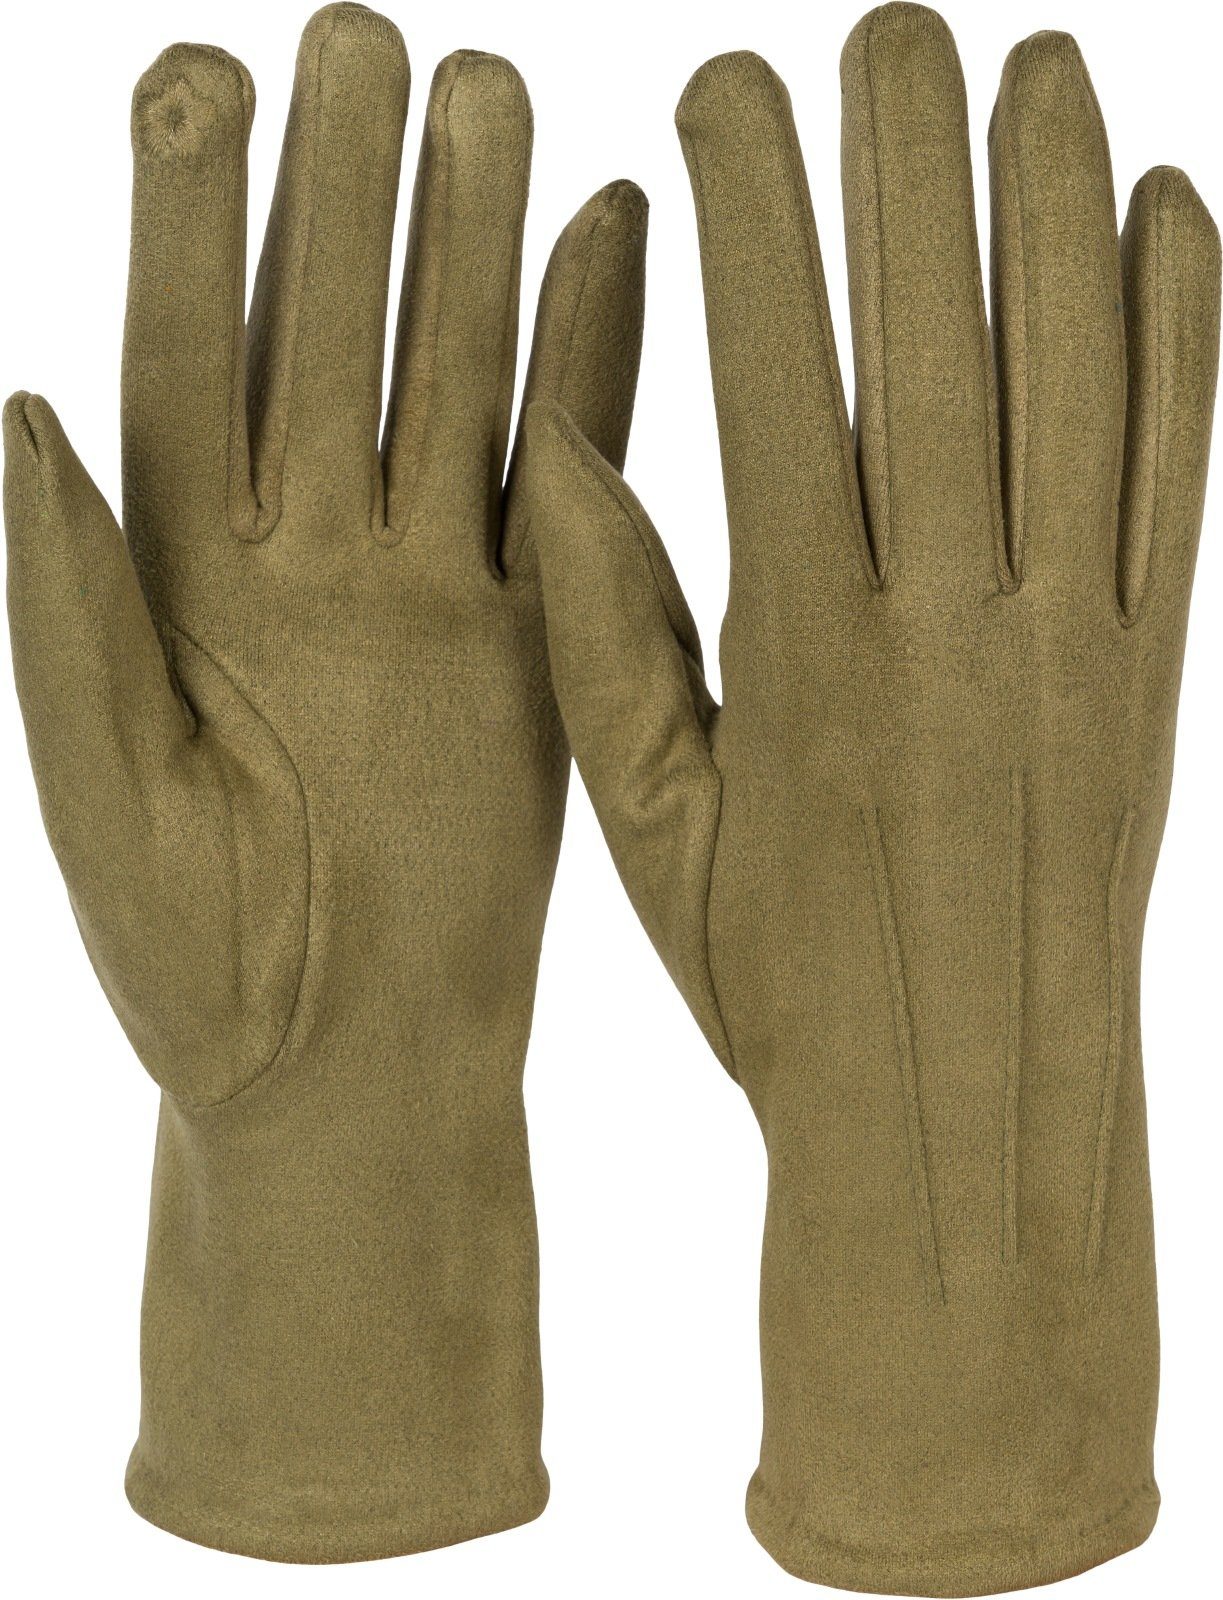 styleBREAKER Fleecehandschuhe Einfarbige Touchscreen Handschuhe Ziernähte Oliv